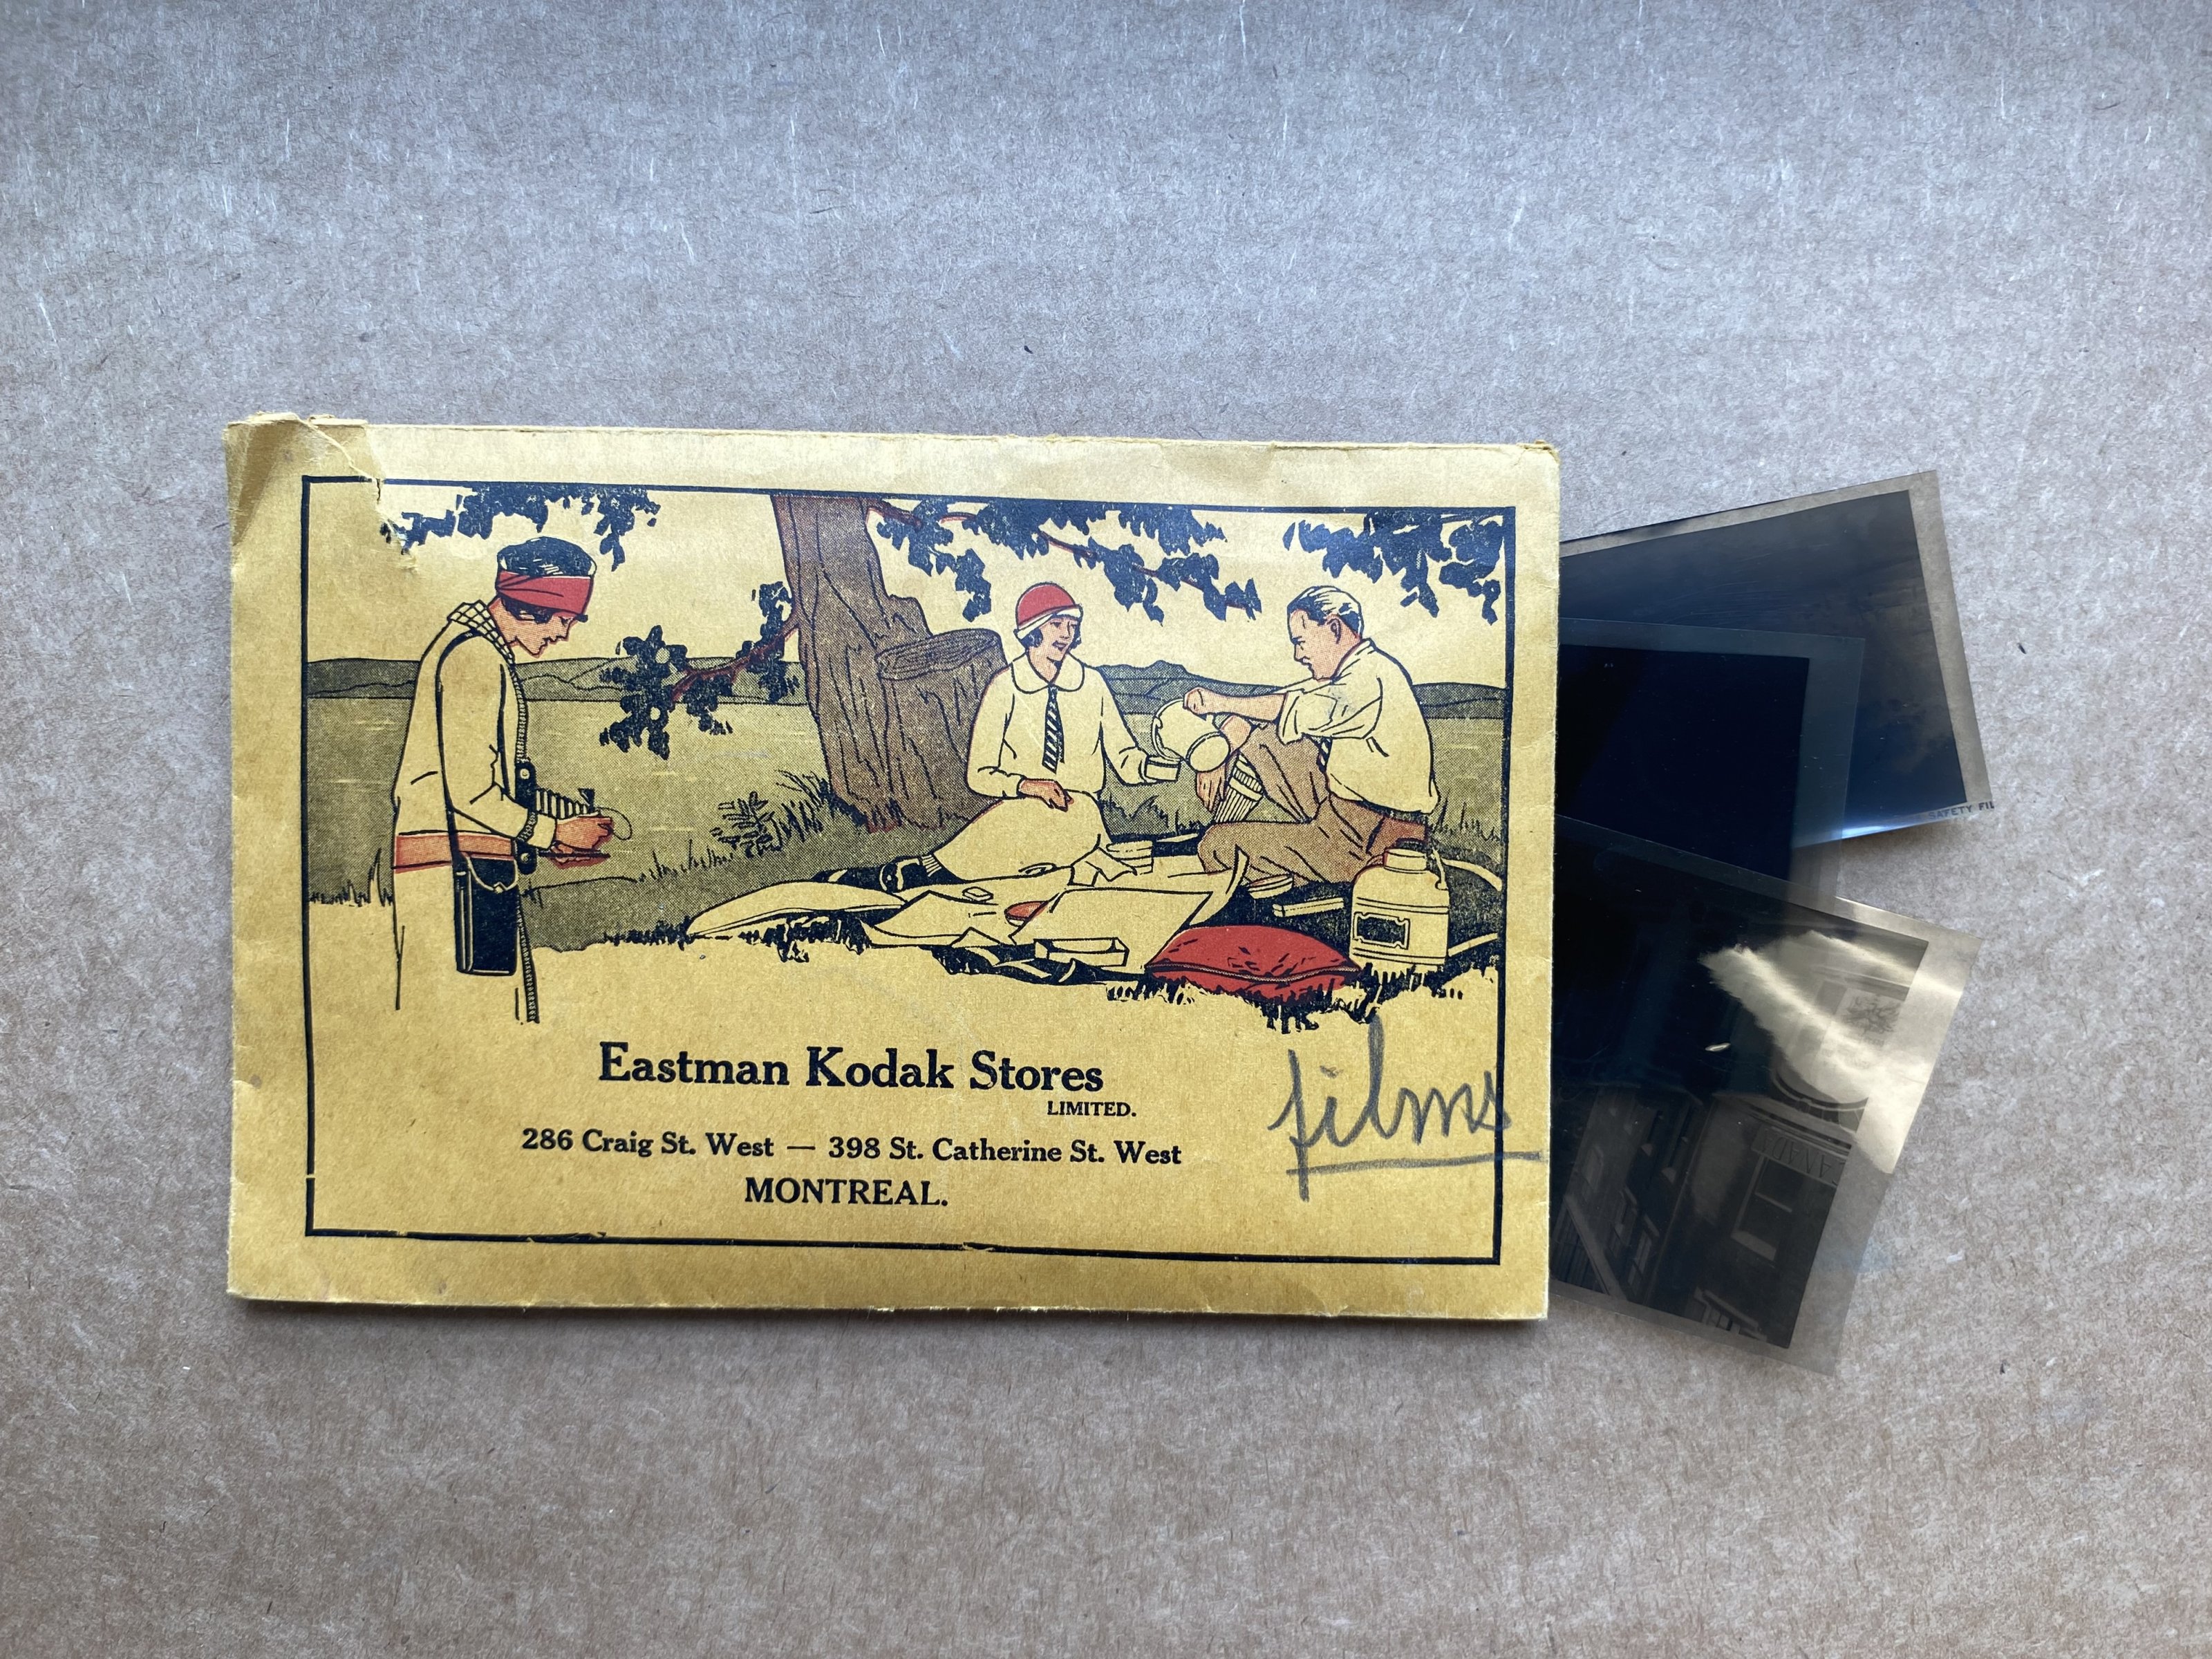 Film negatives from Eastman Kodak Stores, Montréal.